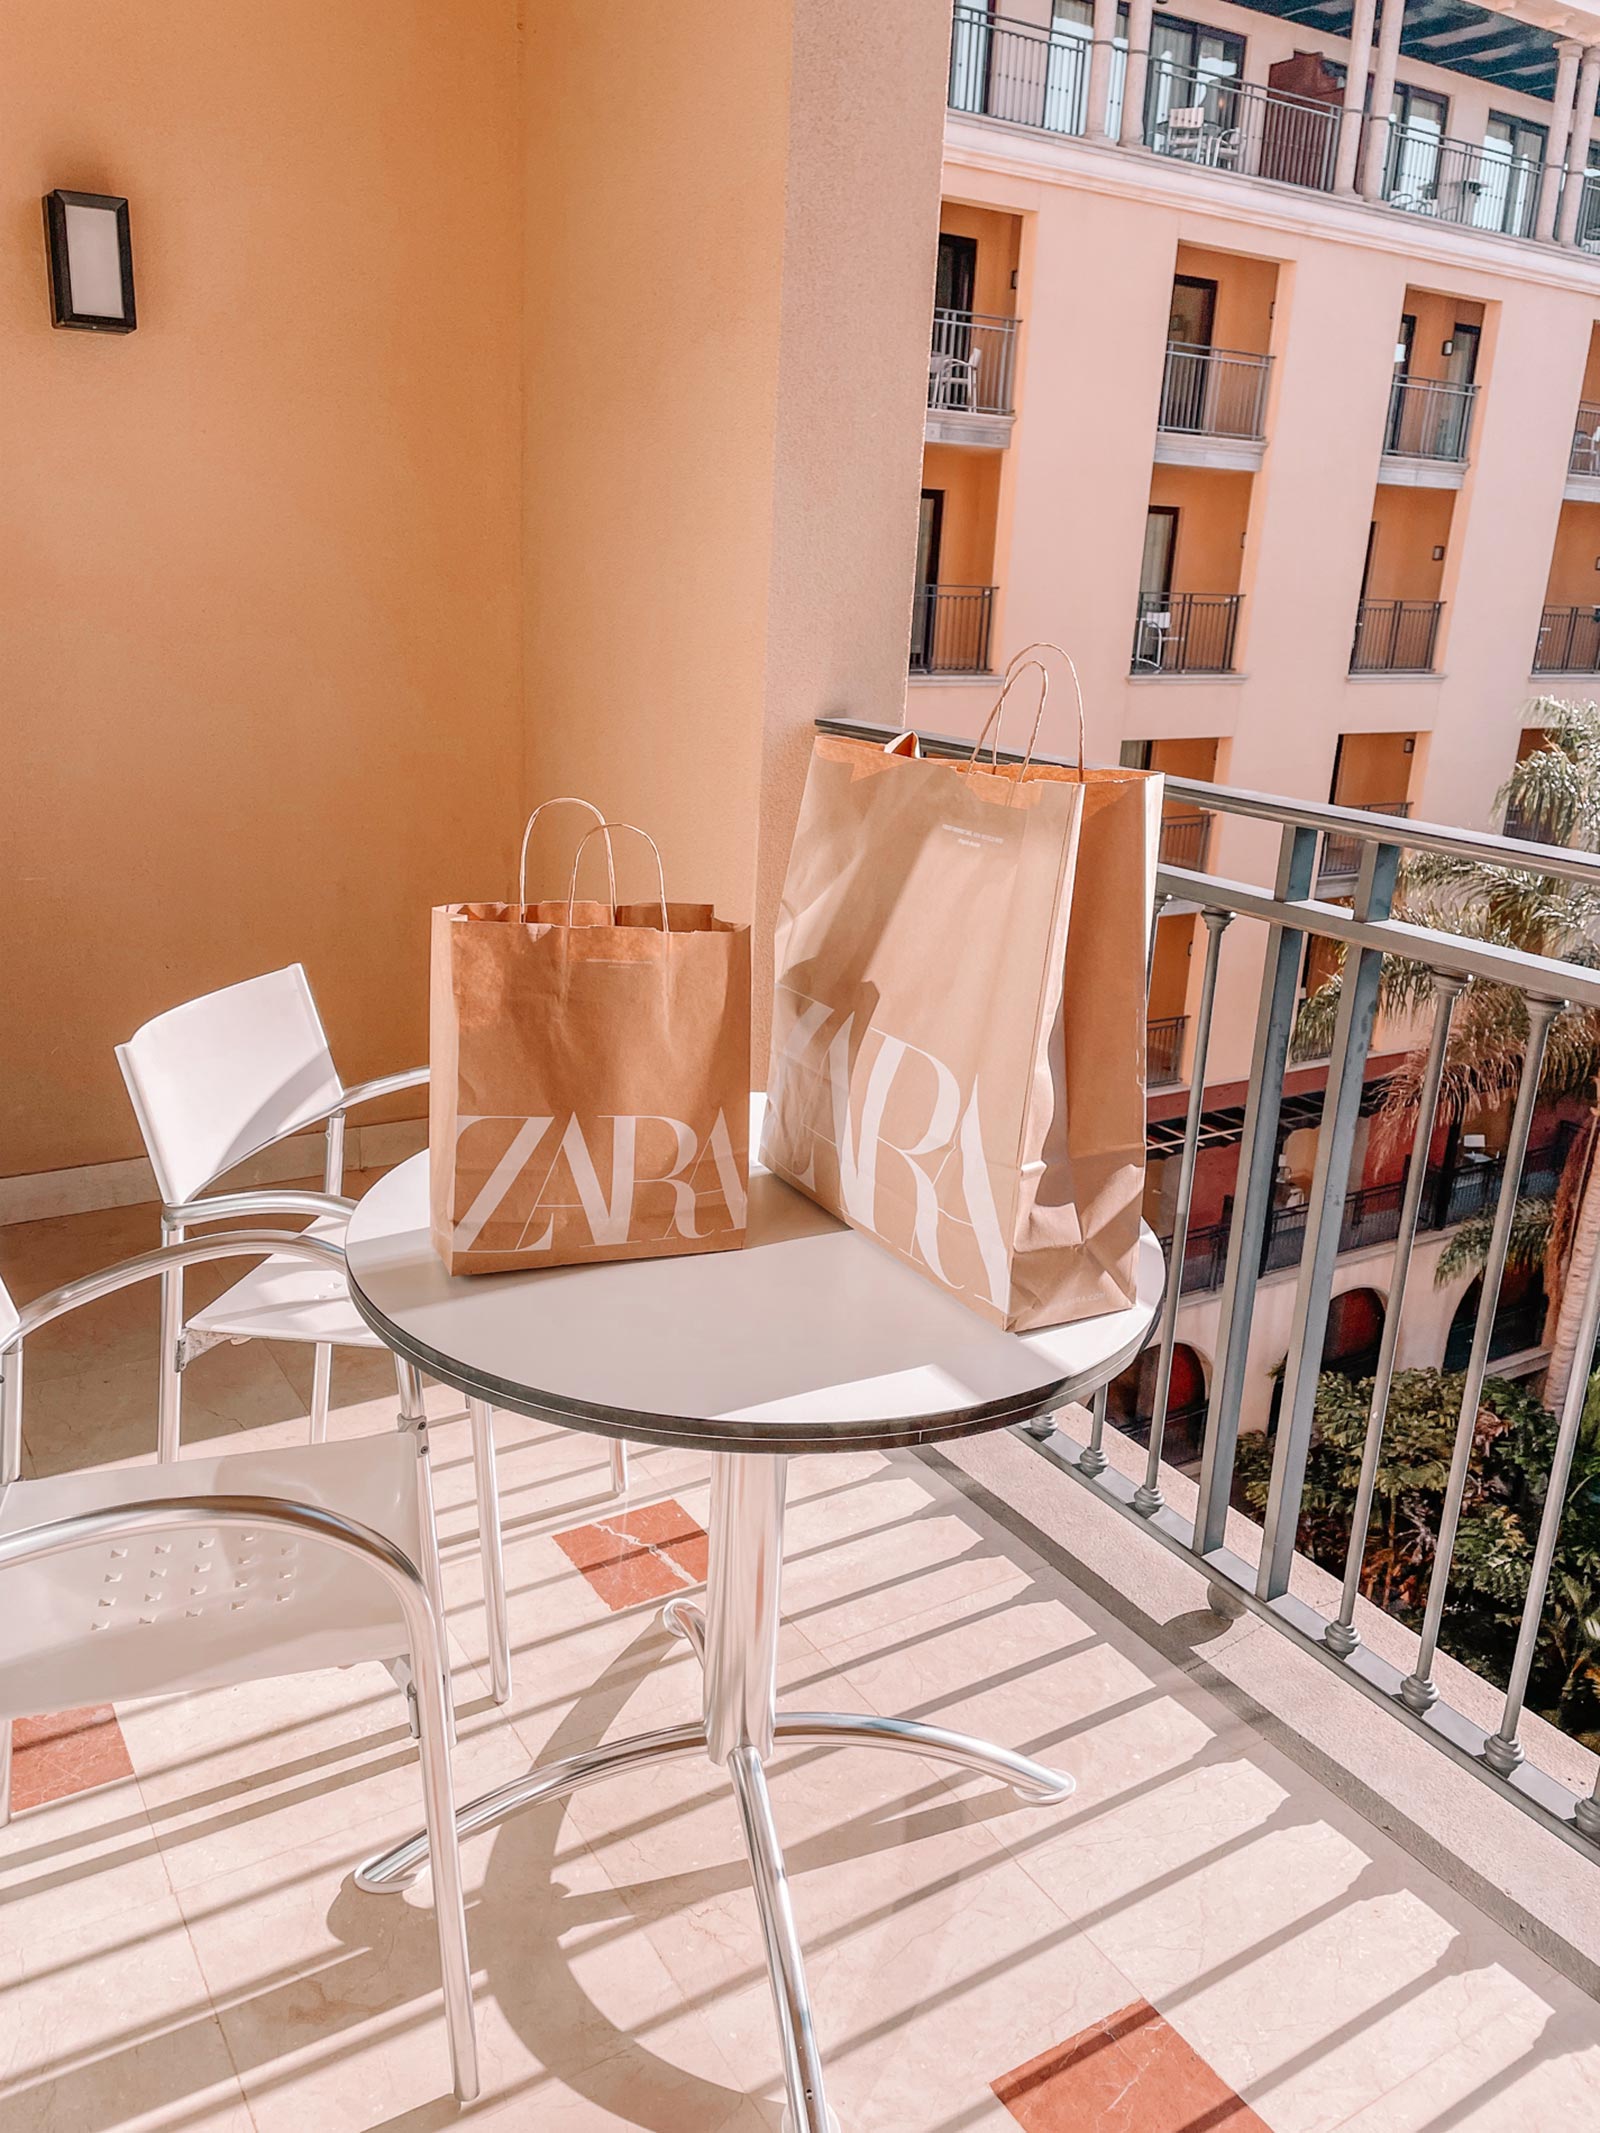 Zara shopping bags on a hotel balcony